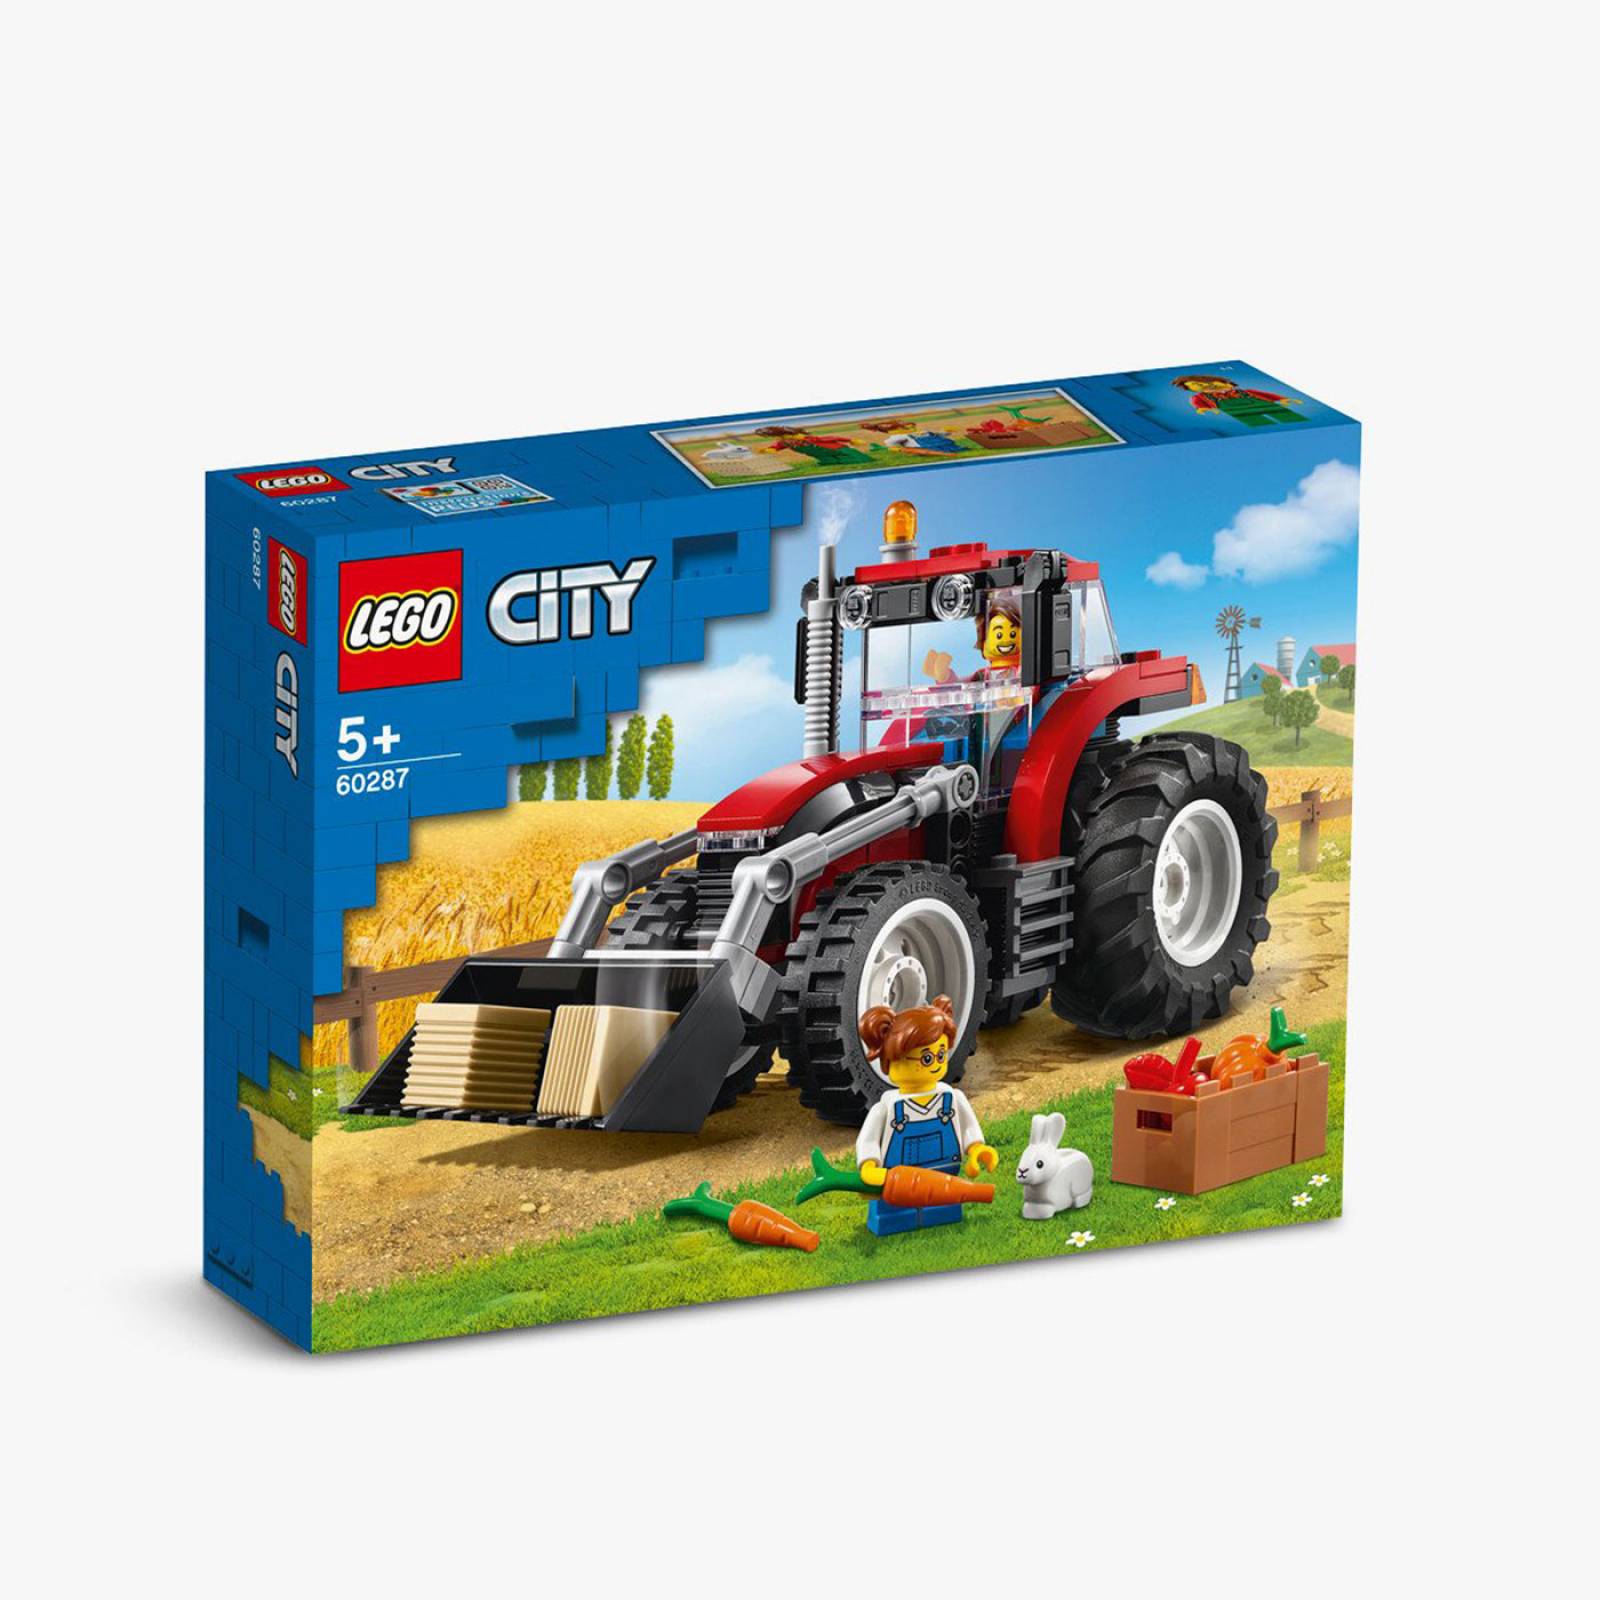 LEGO City Tractor 60287 thumbnails